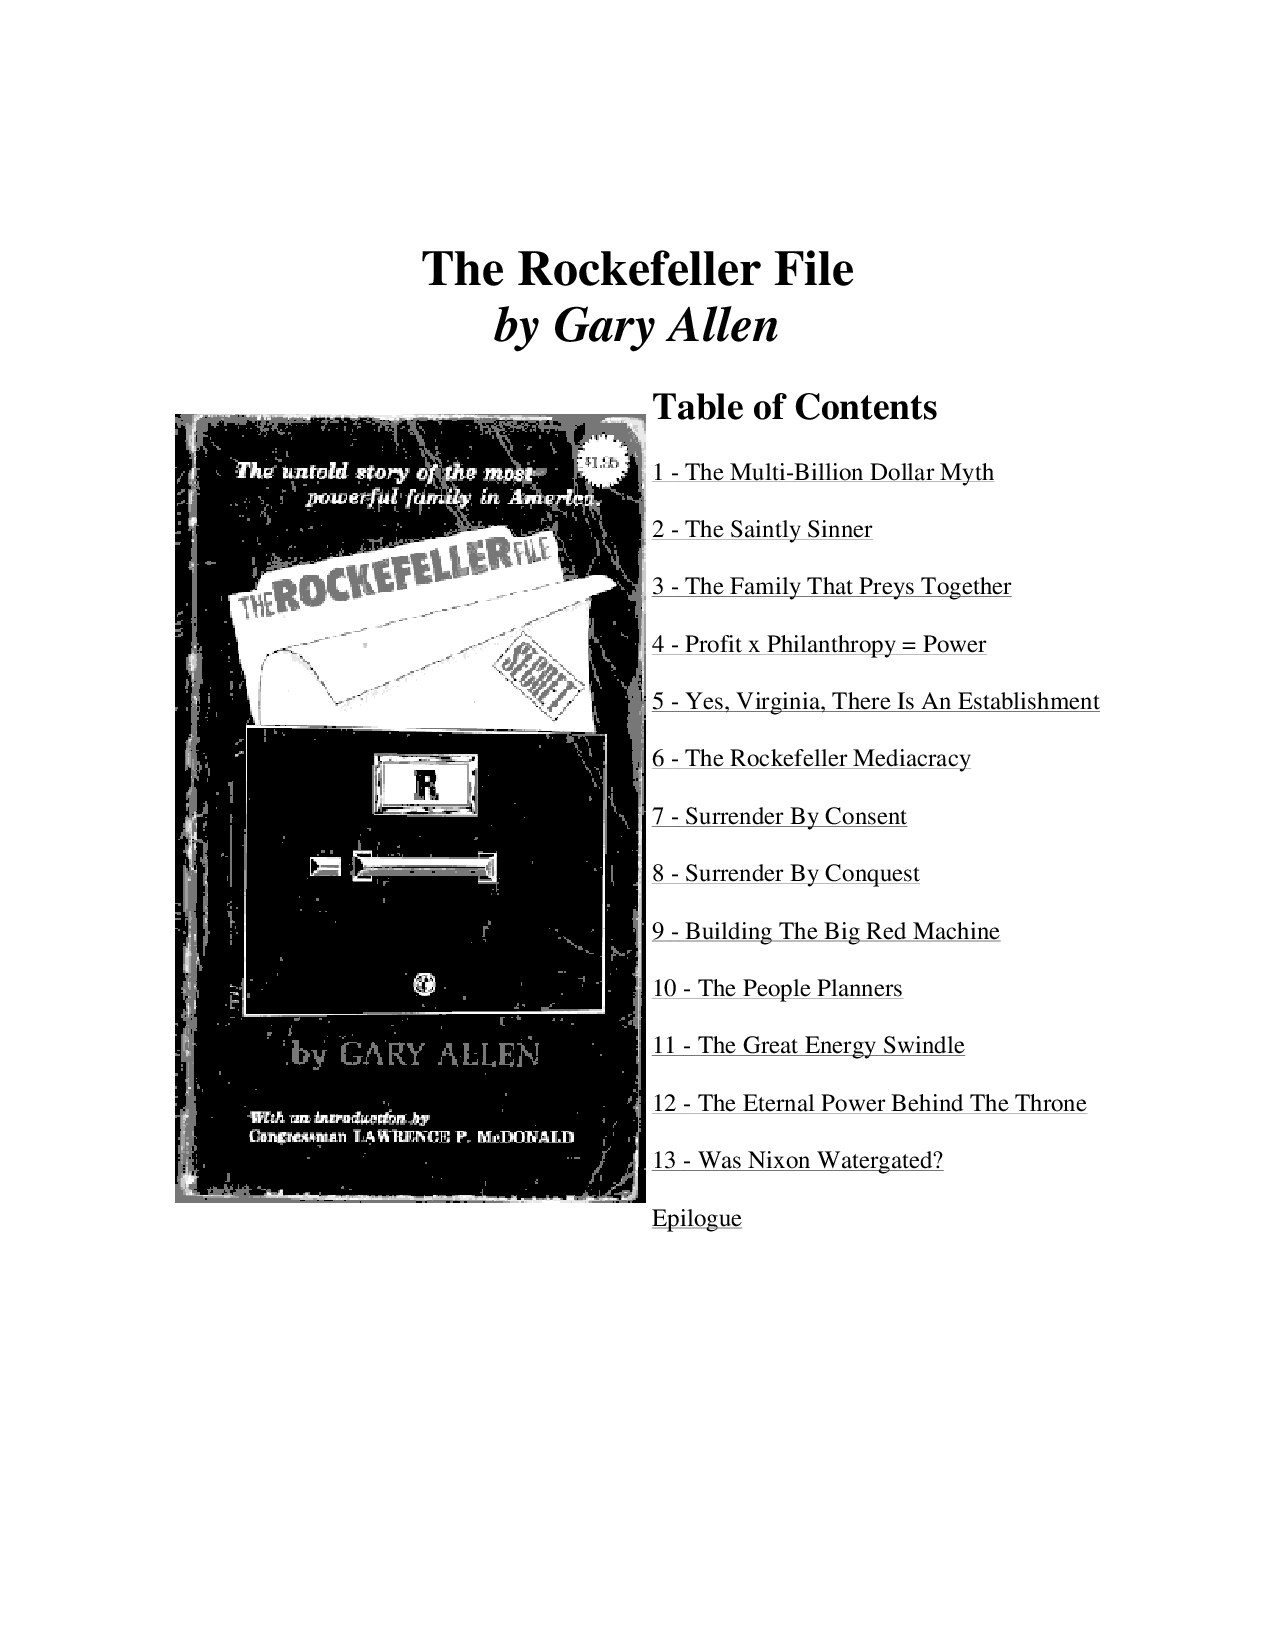 Allen, Gary; The Rockefeller Files